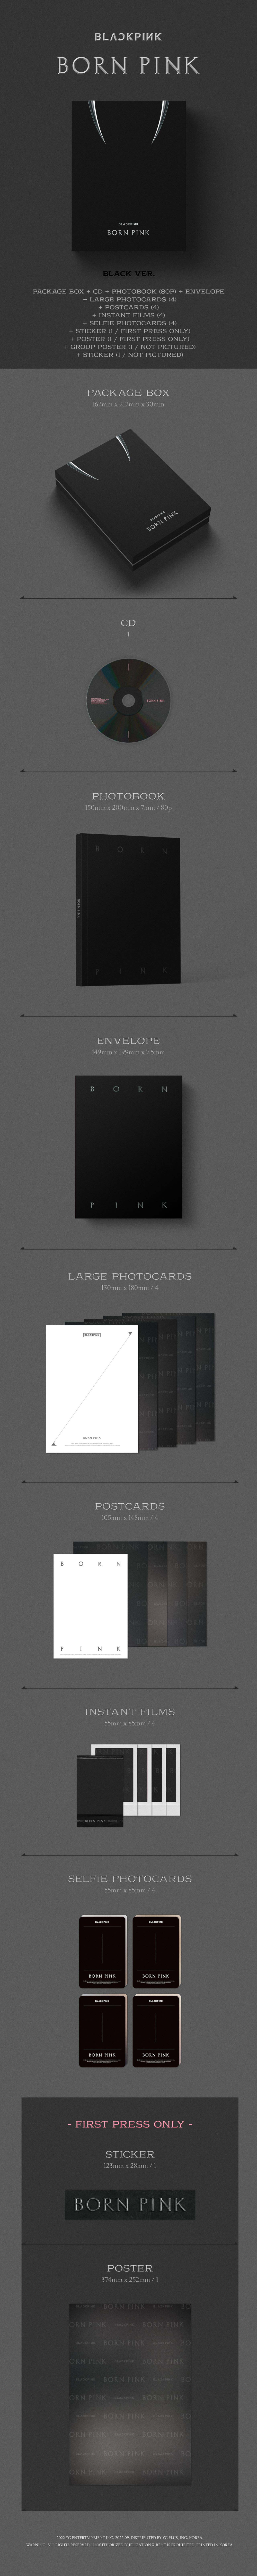 Blackpink - (CD) Black/Ver.B) - Pink Born (Ltd.Edt.Boxset